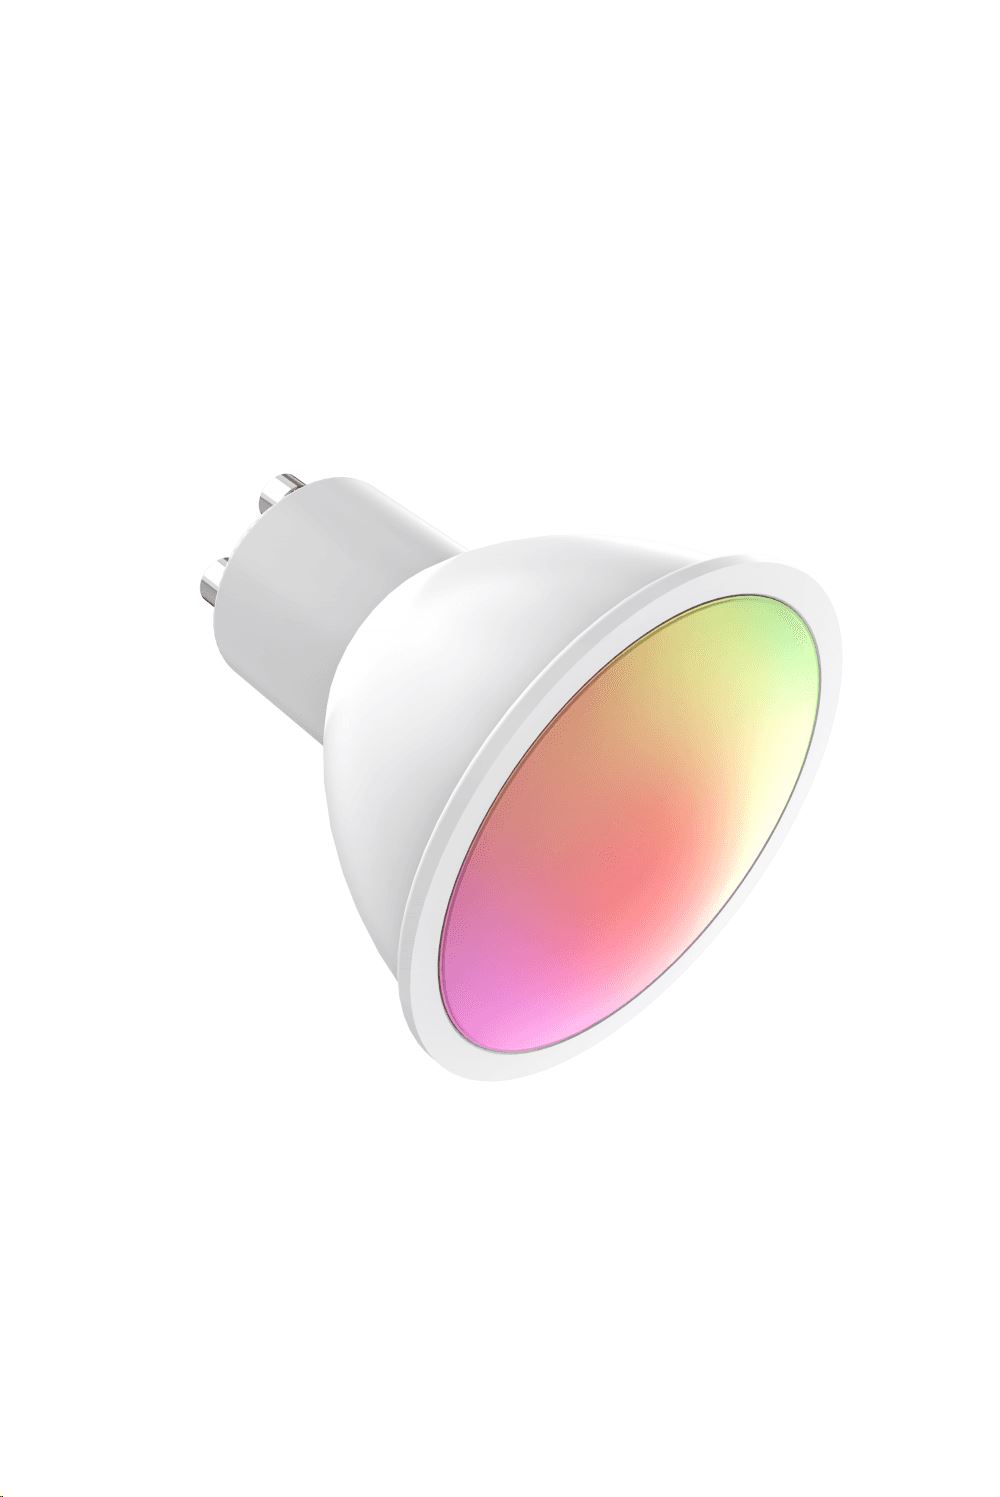 Woox Smart Home okos LED fényforrás GU10 5.5W 2700-6500K (R9076)